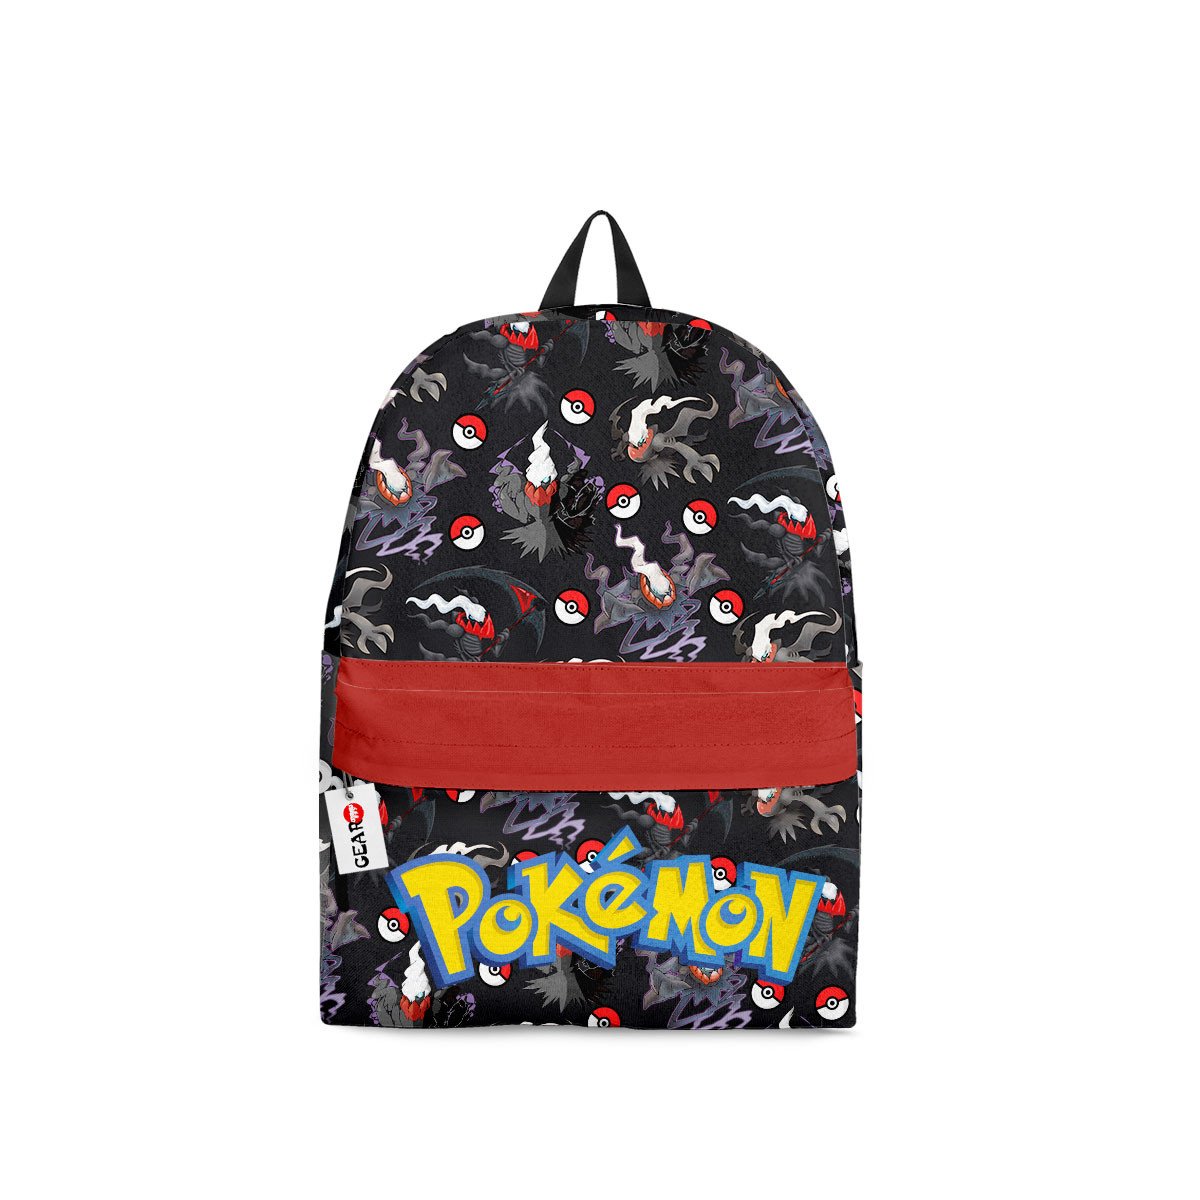 BEST Drakai Pokemon Anime Printed 3D Leisure Backpack